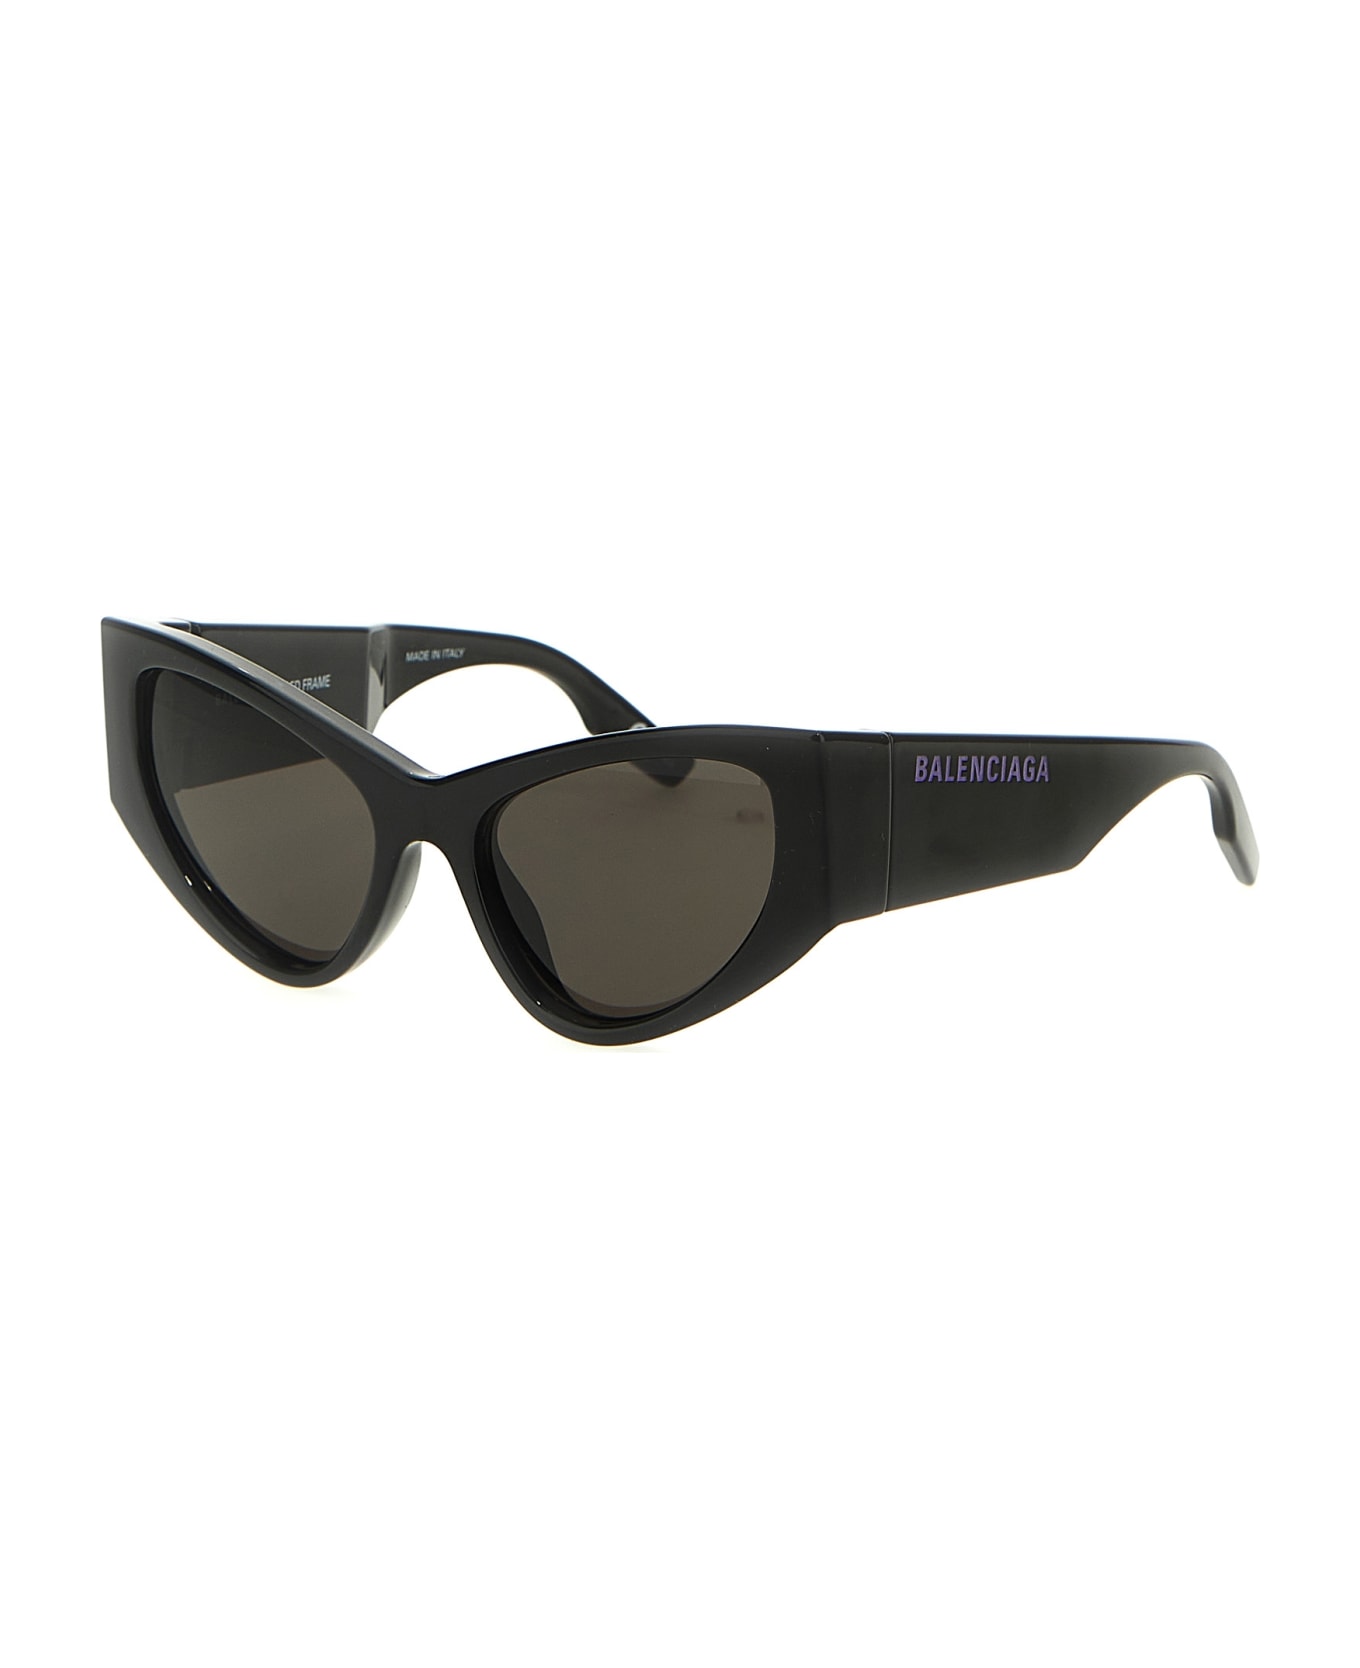 Balenciaga Eyewear 'led Frame' Sunglasses - Black